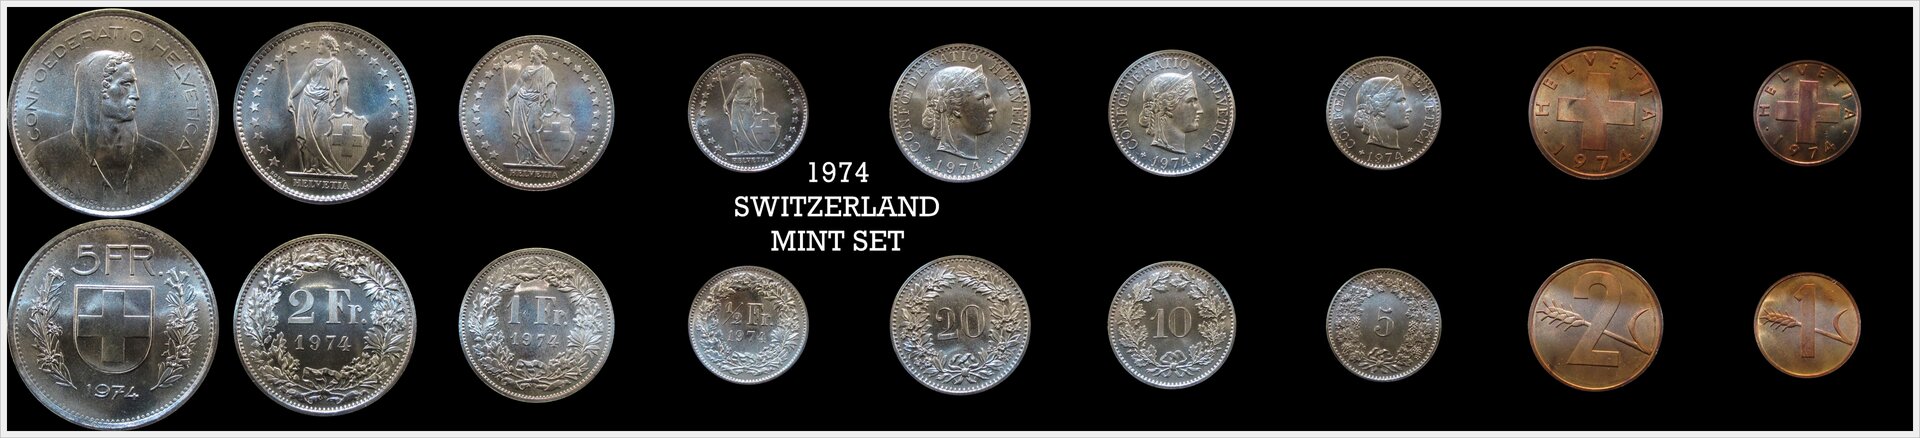 switzerland 1974 mint set.jpg